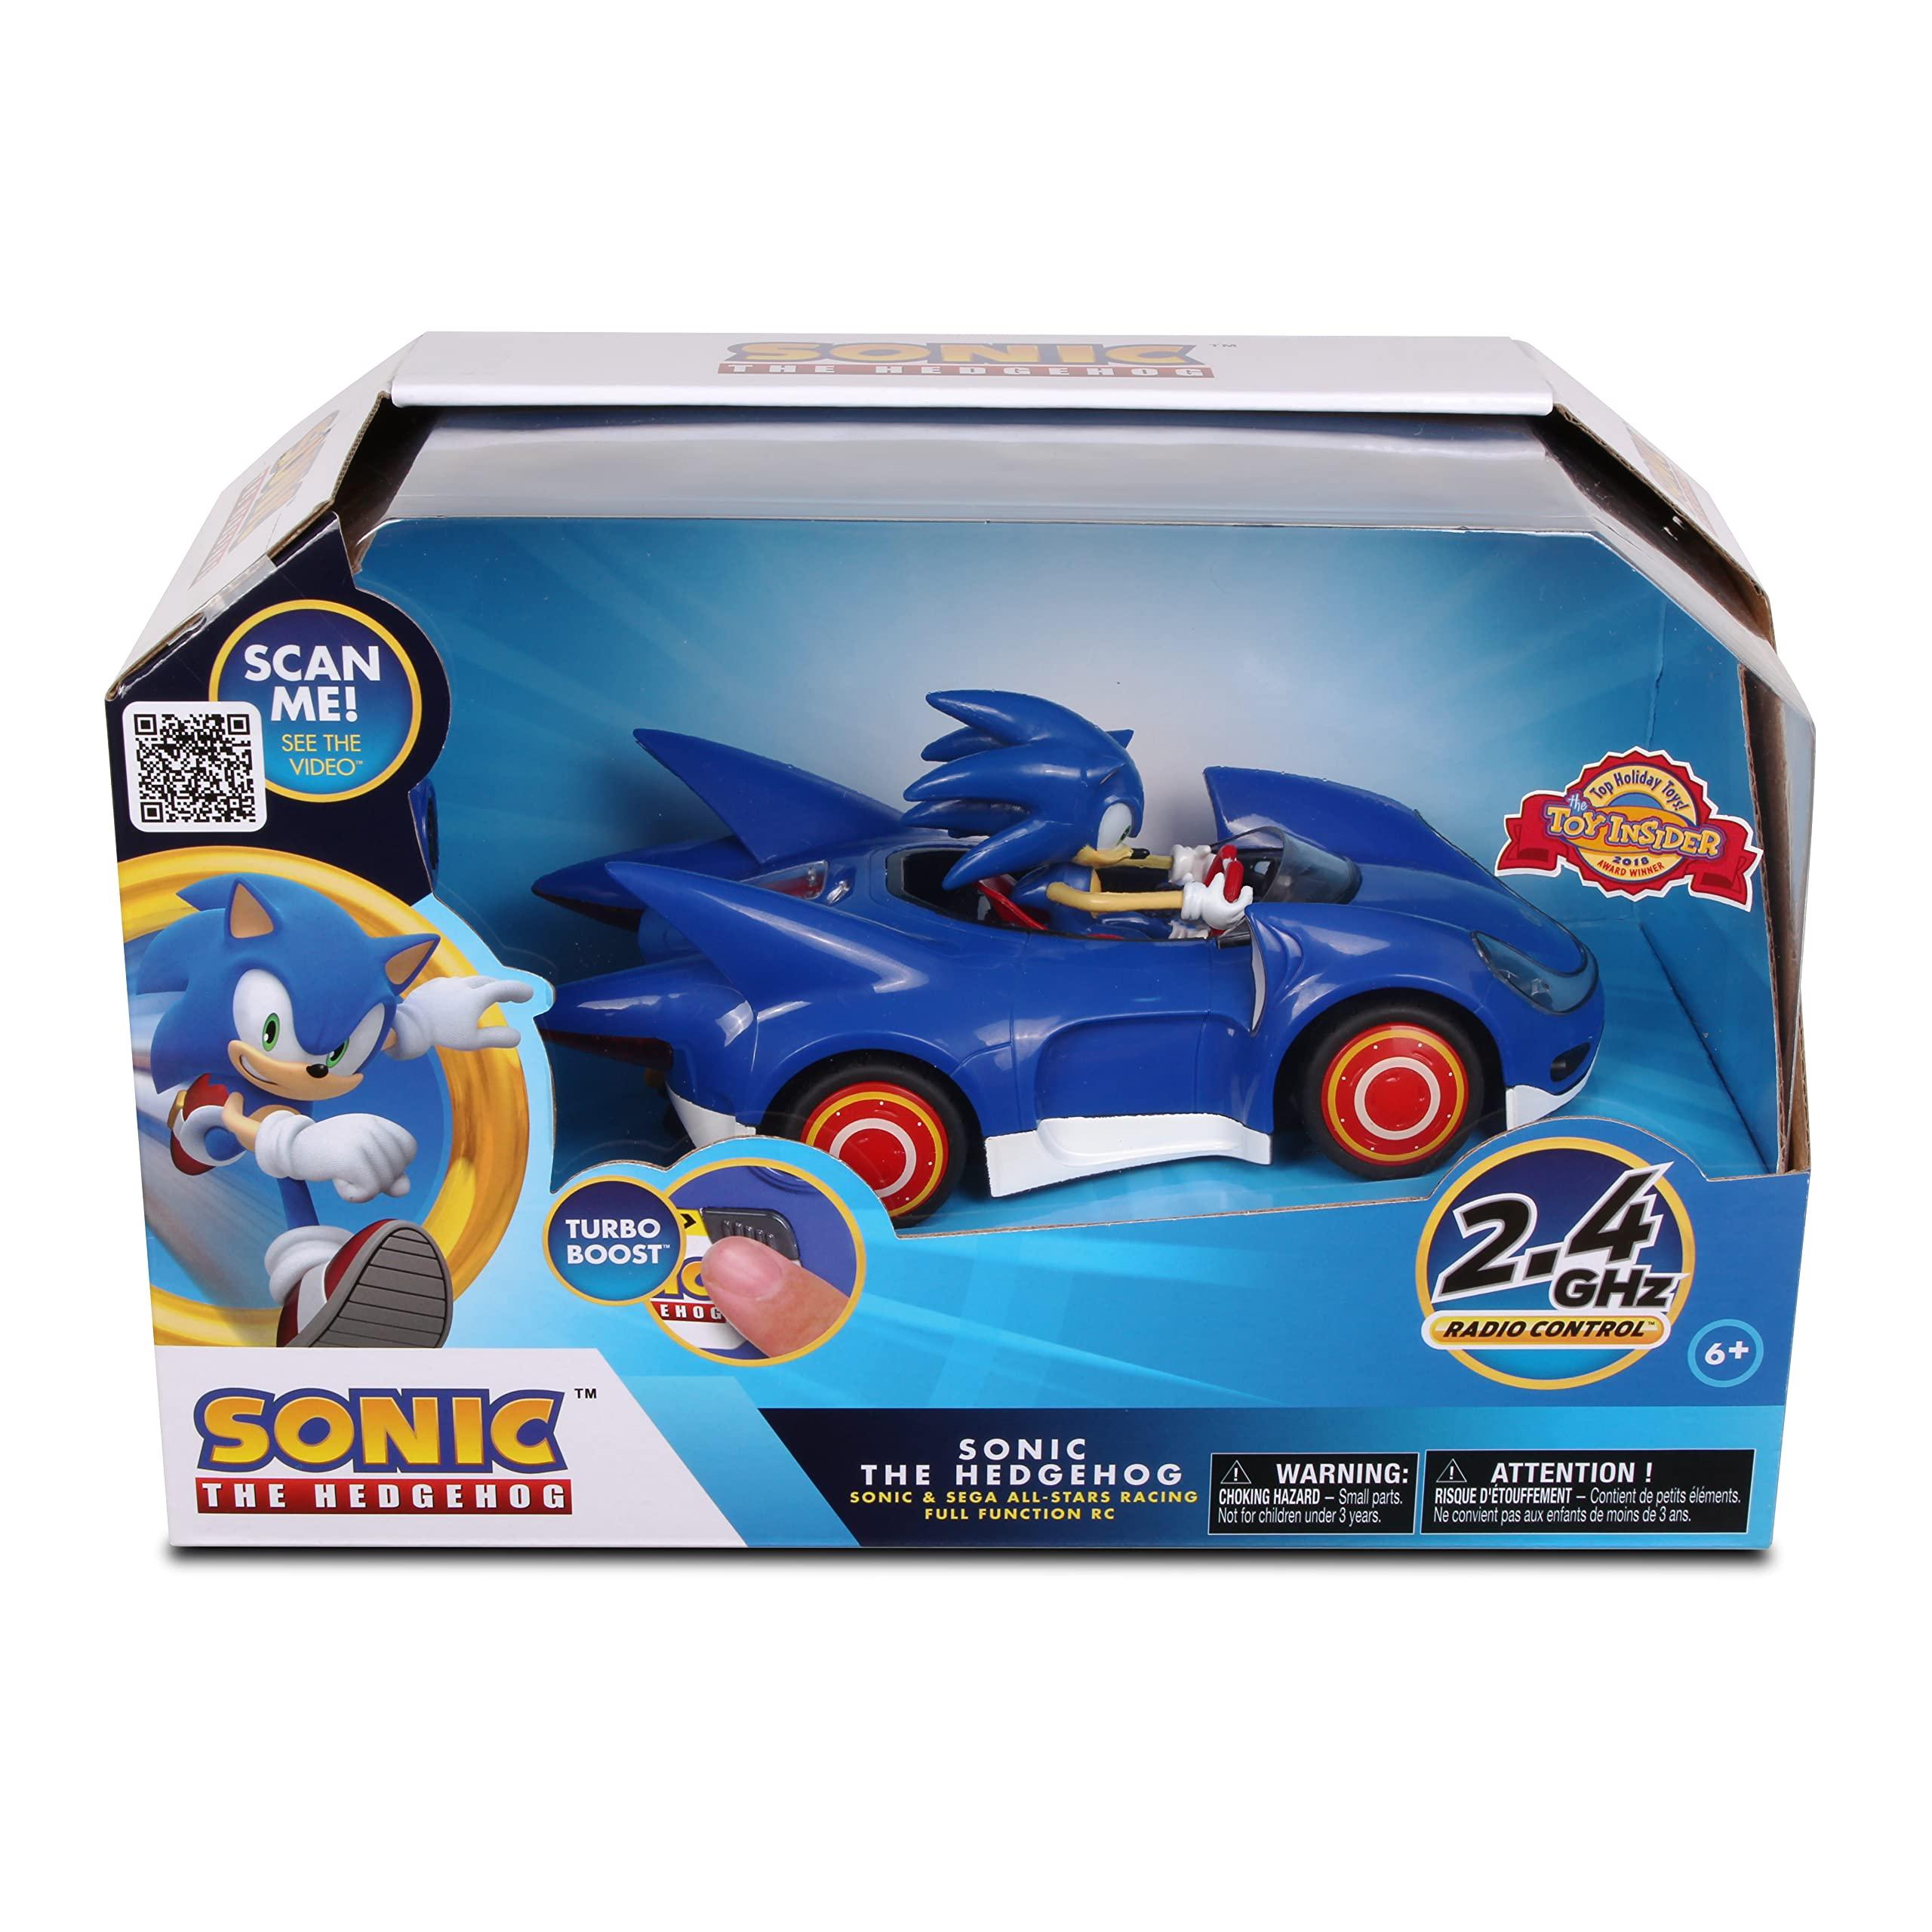 Sonic Remote Control Toys:  Top sonic remote control toysBest remote control options on the market